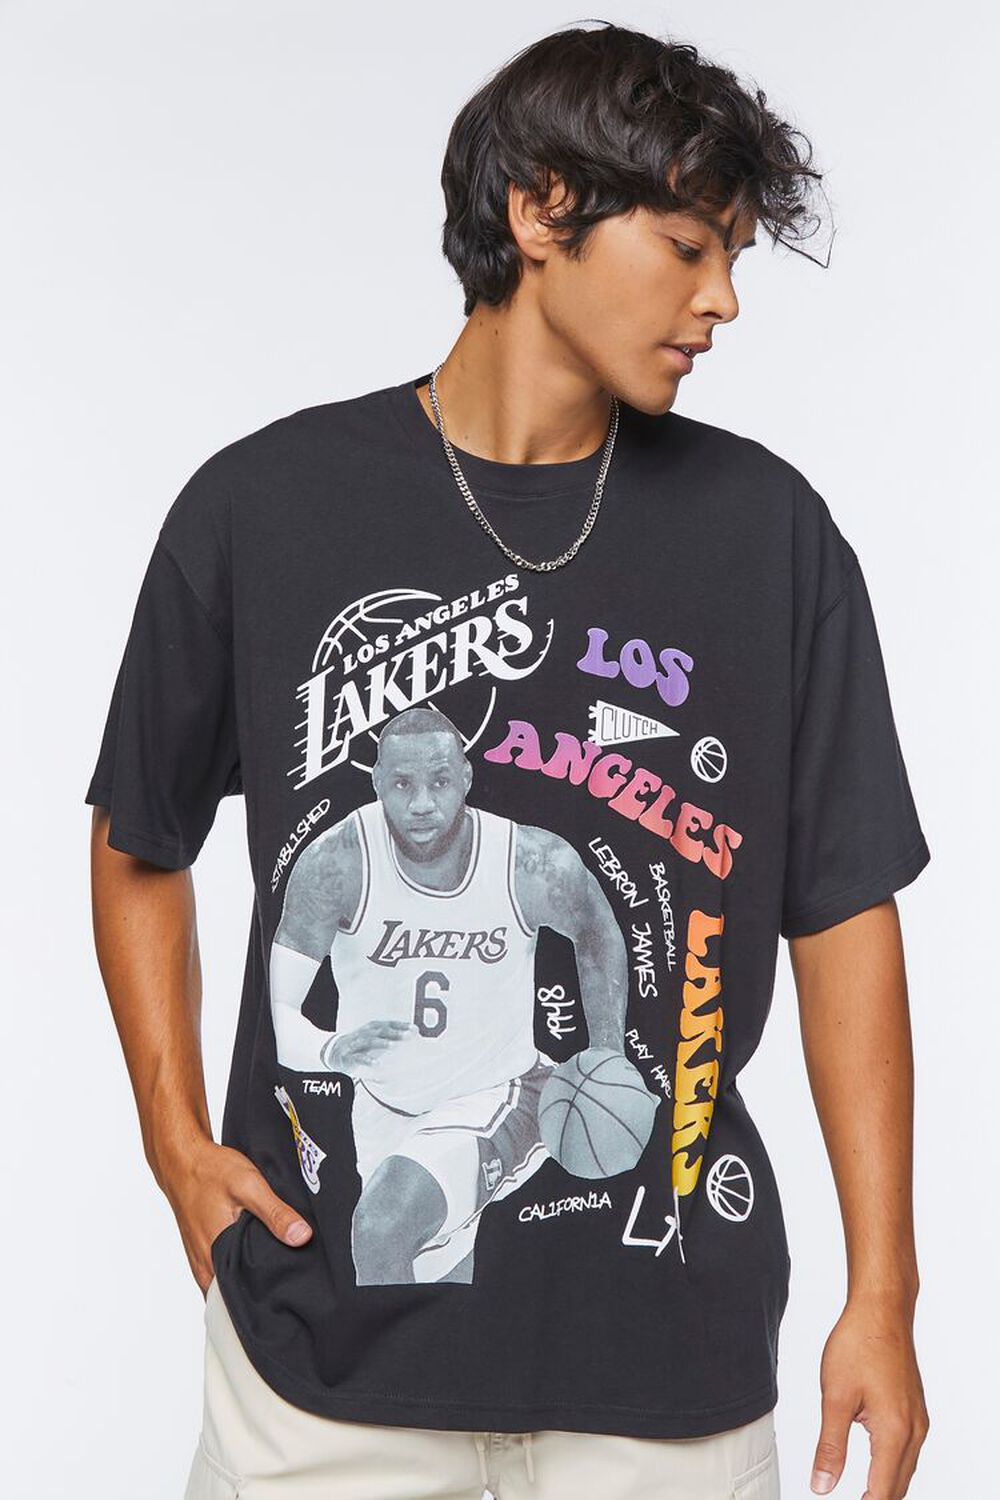 LeBron Men's Long-Sleeve Basketball T-Shirt.